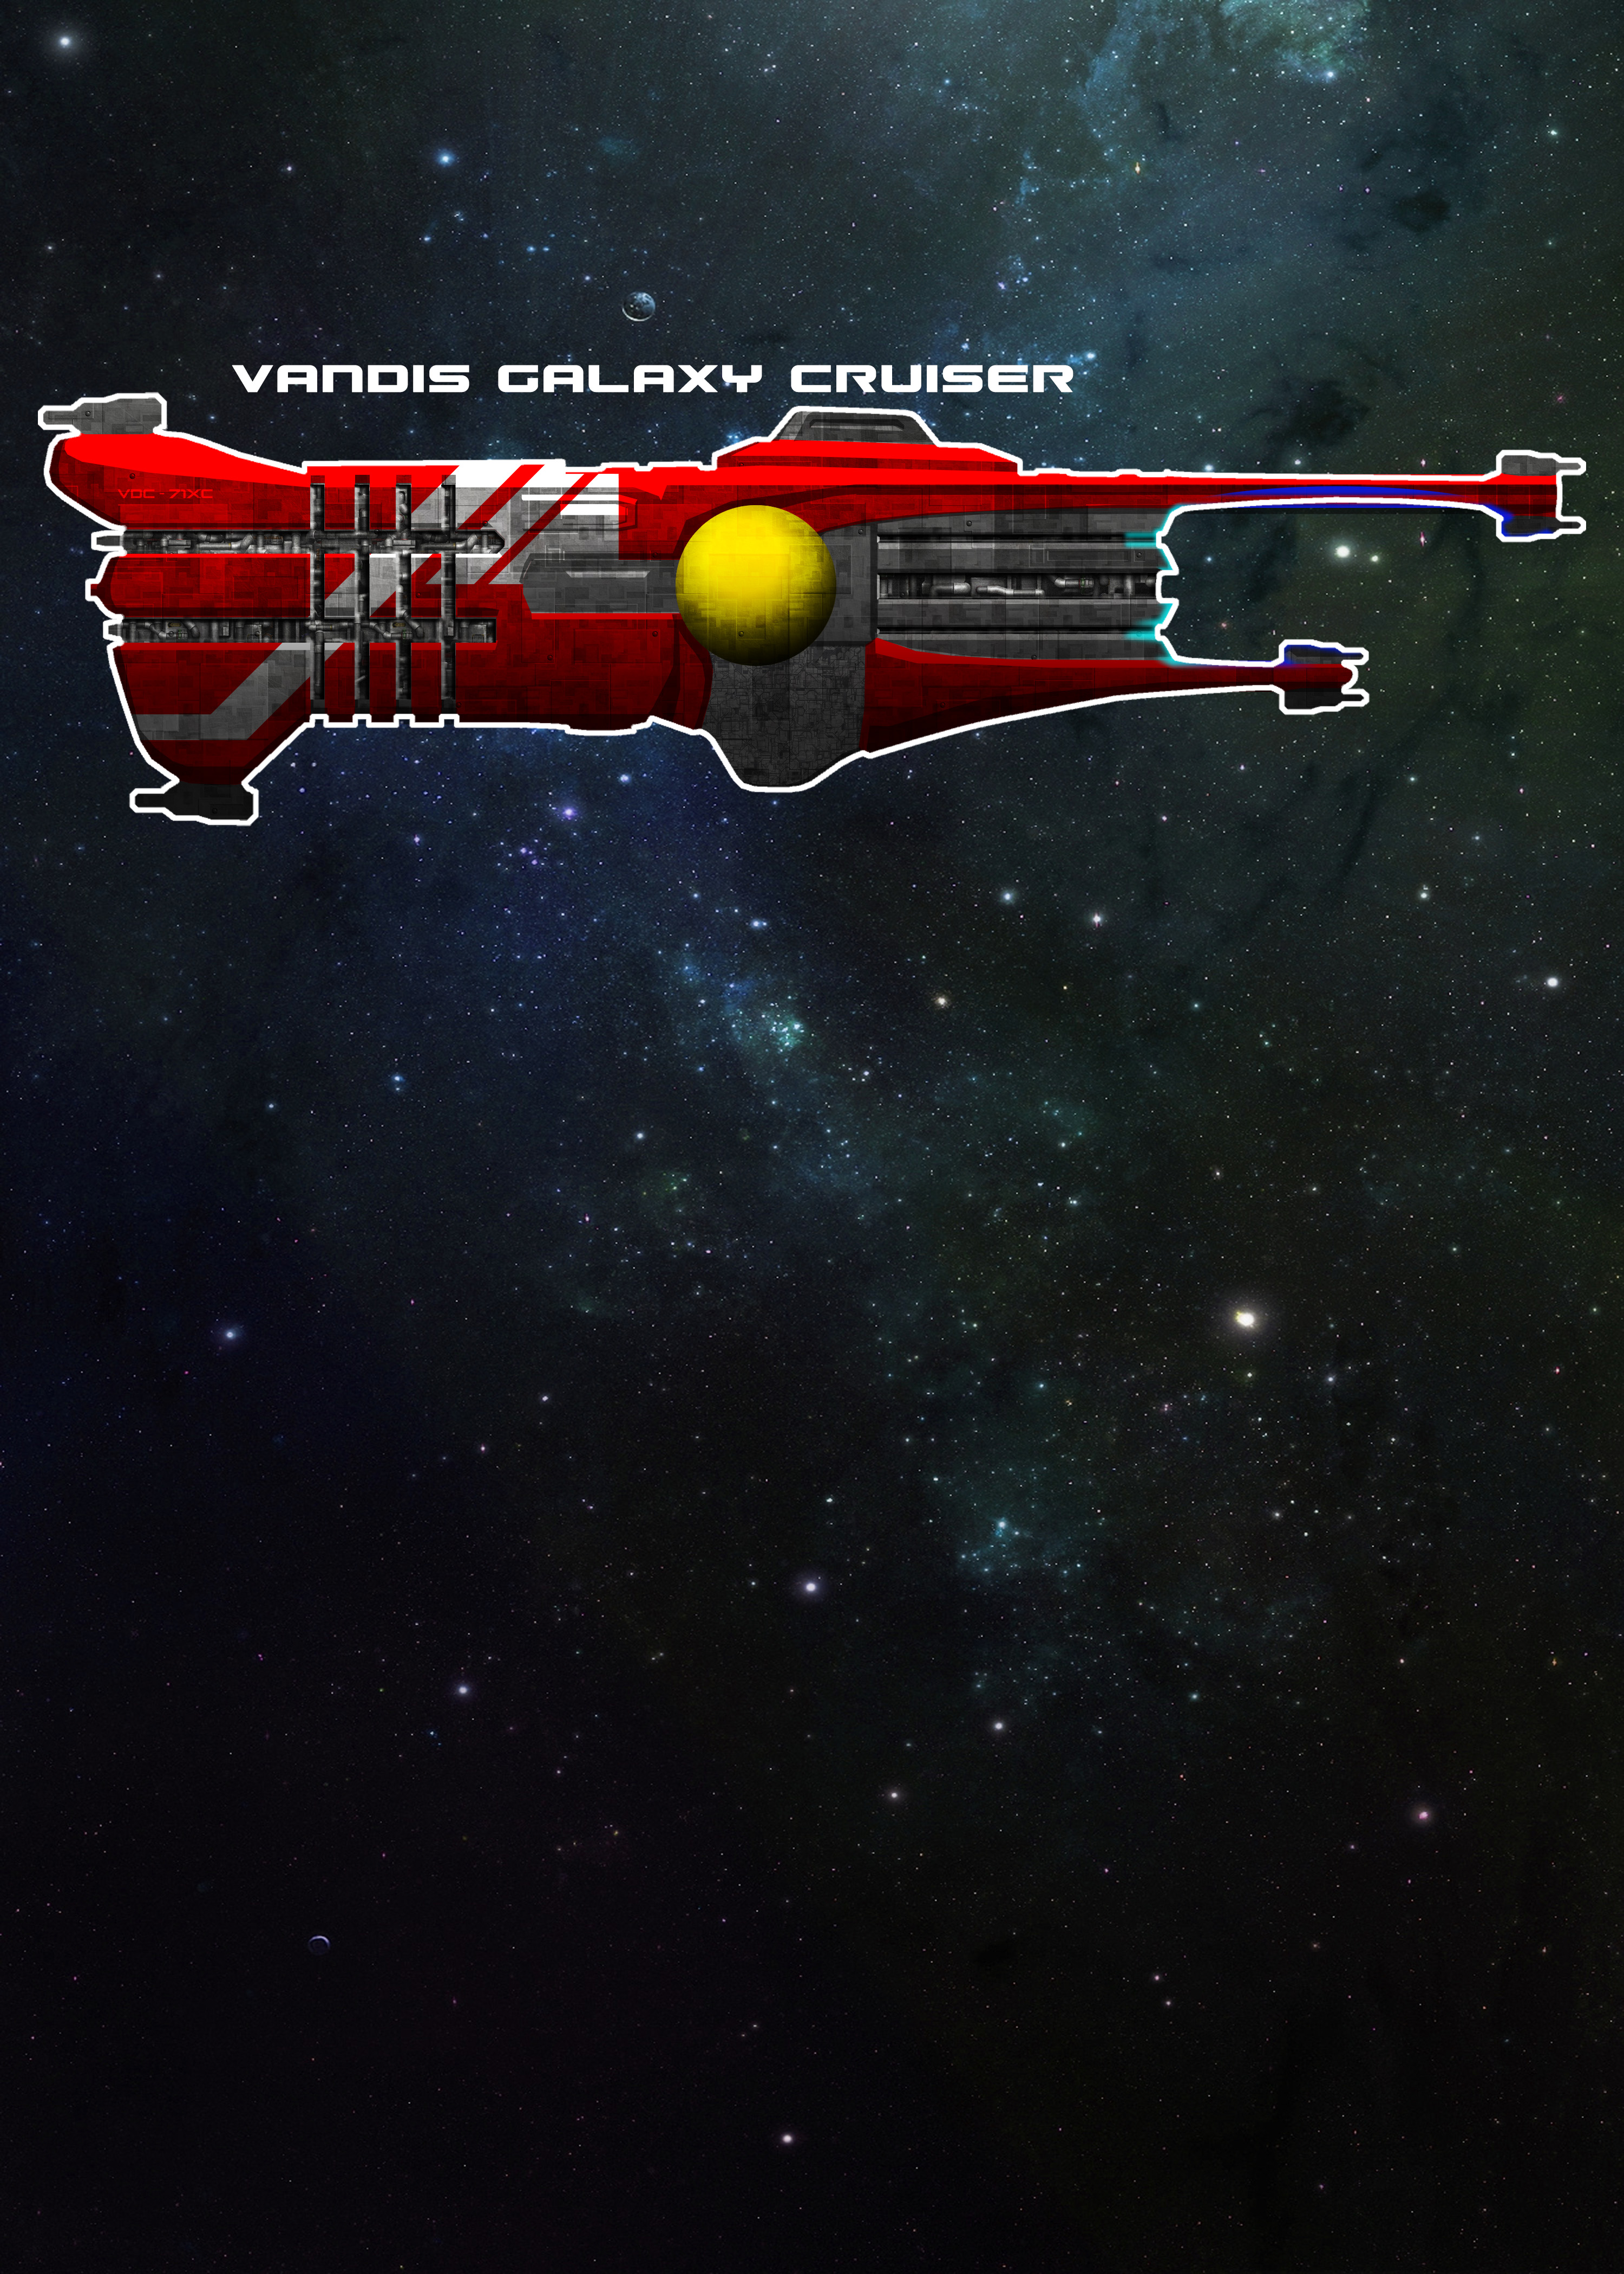 Vandis Galaxy Cruiser